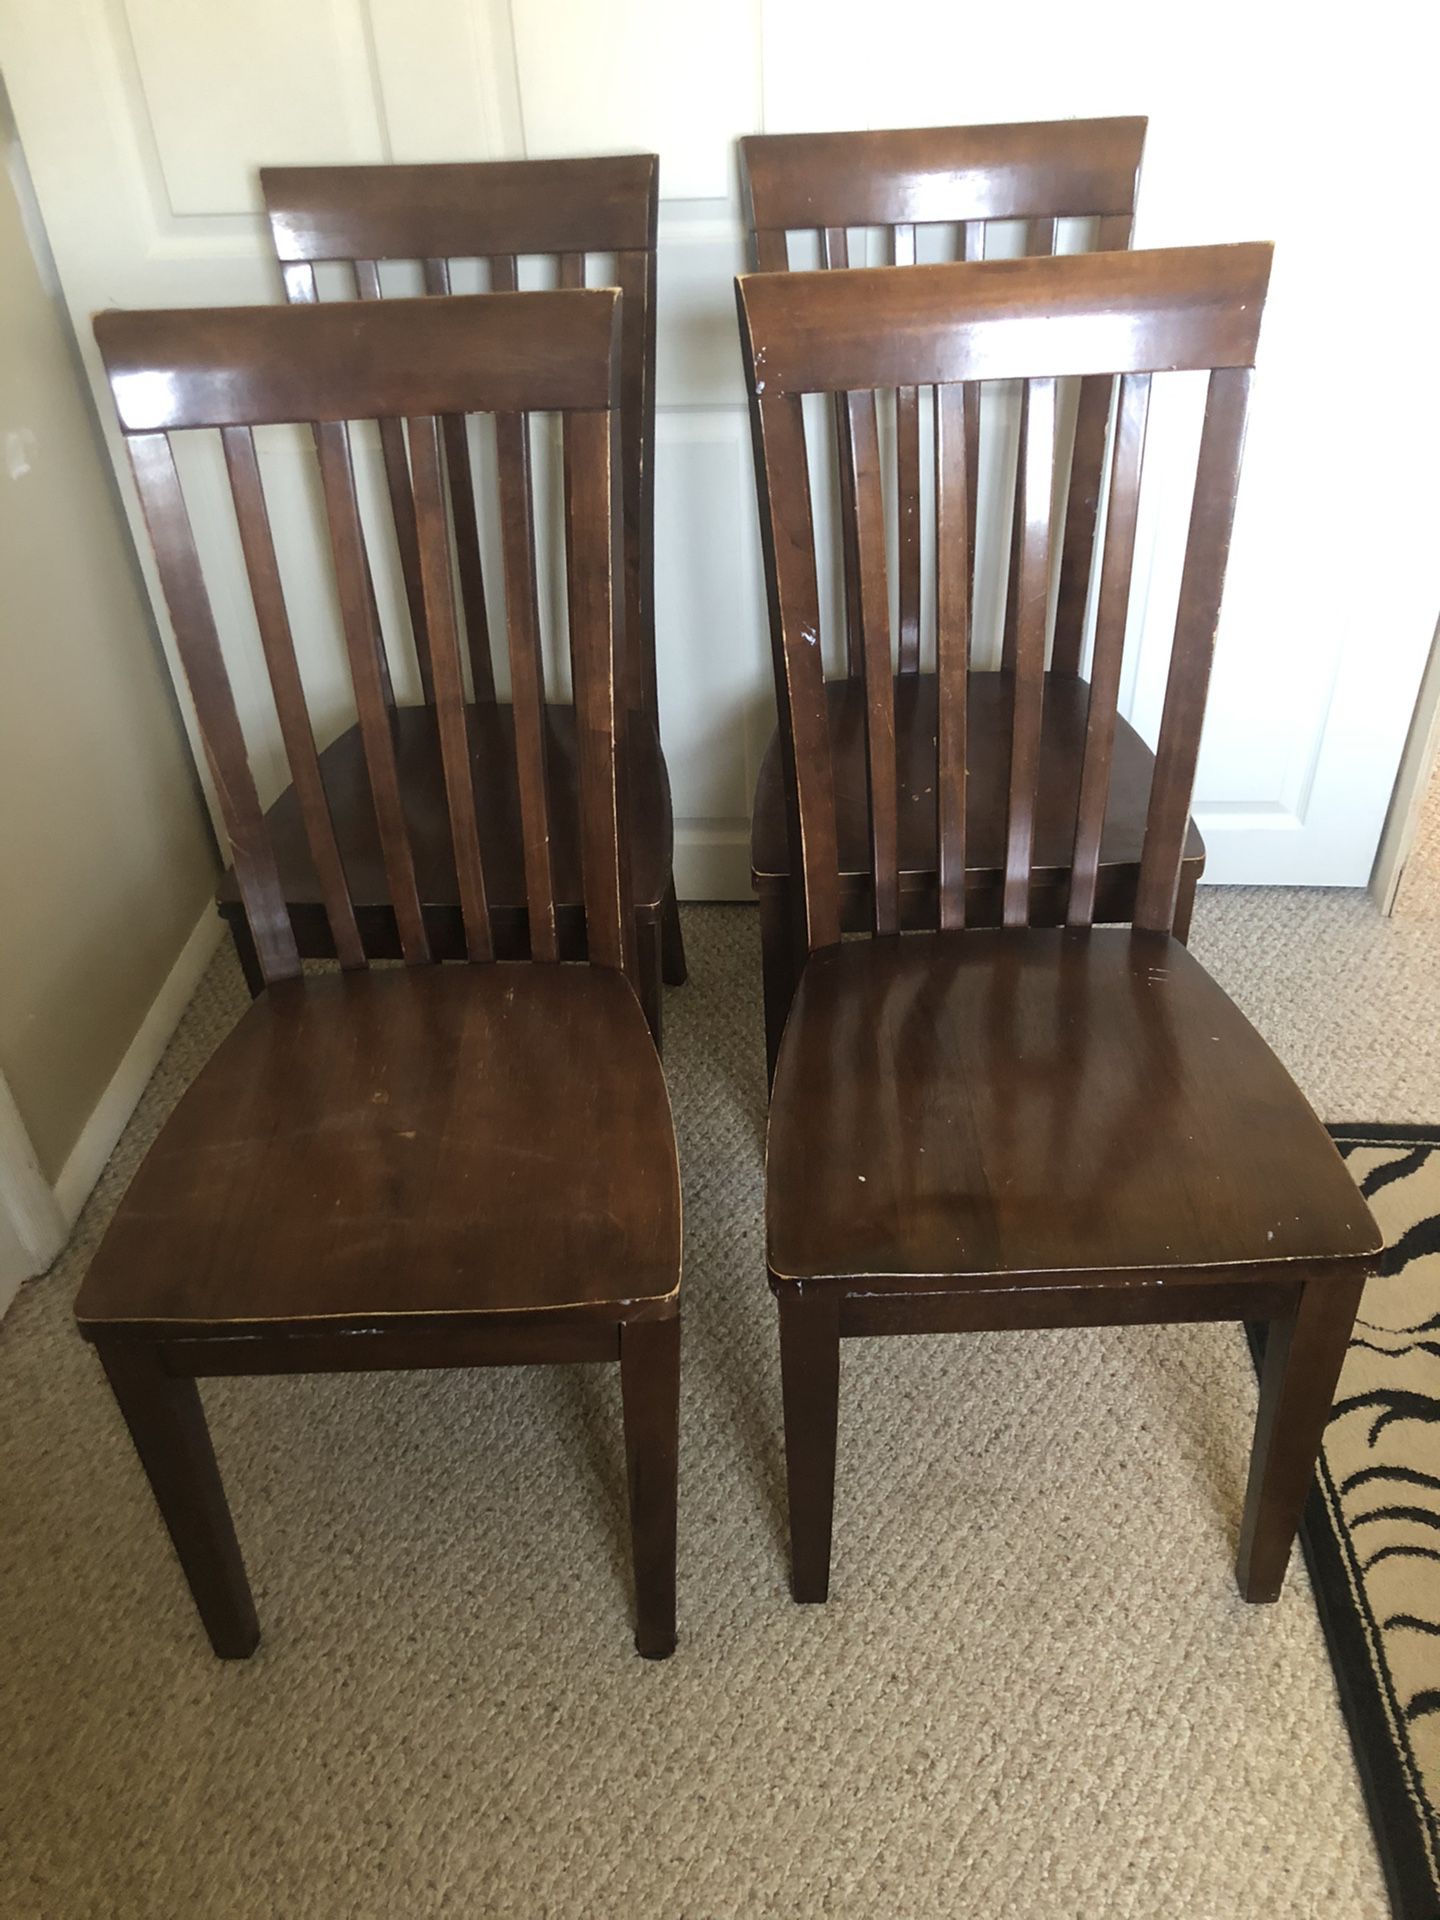 4 Wood chairs